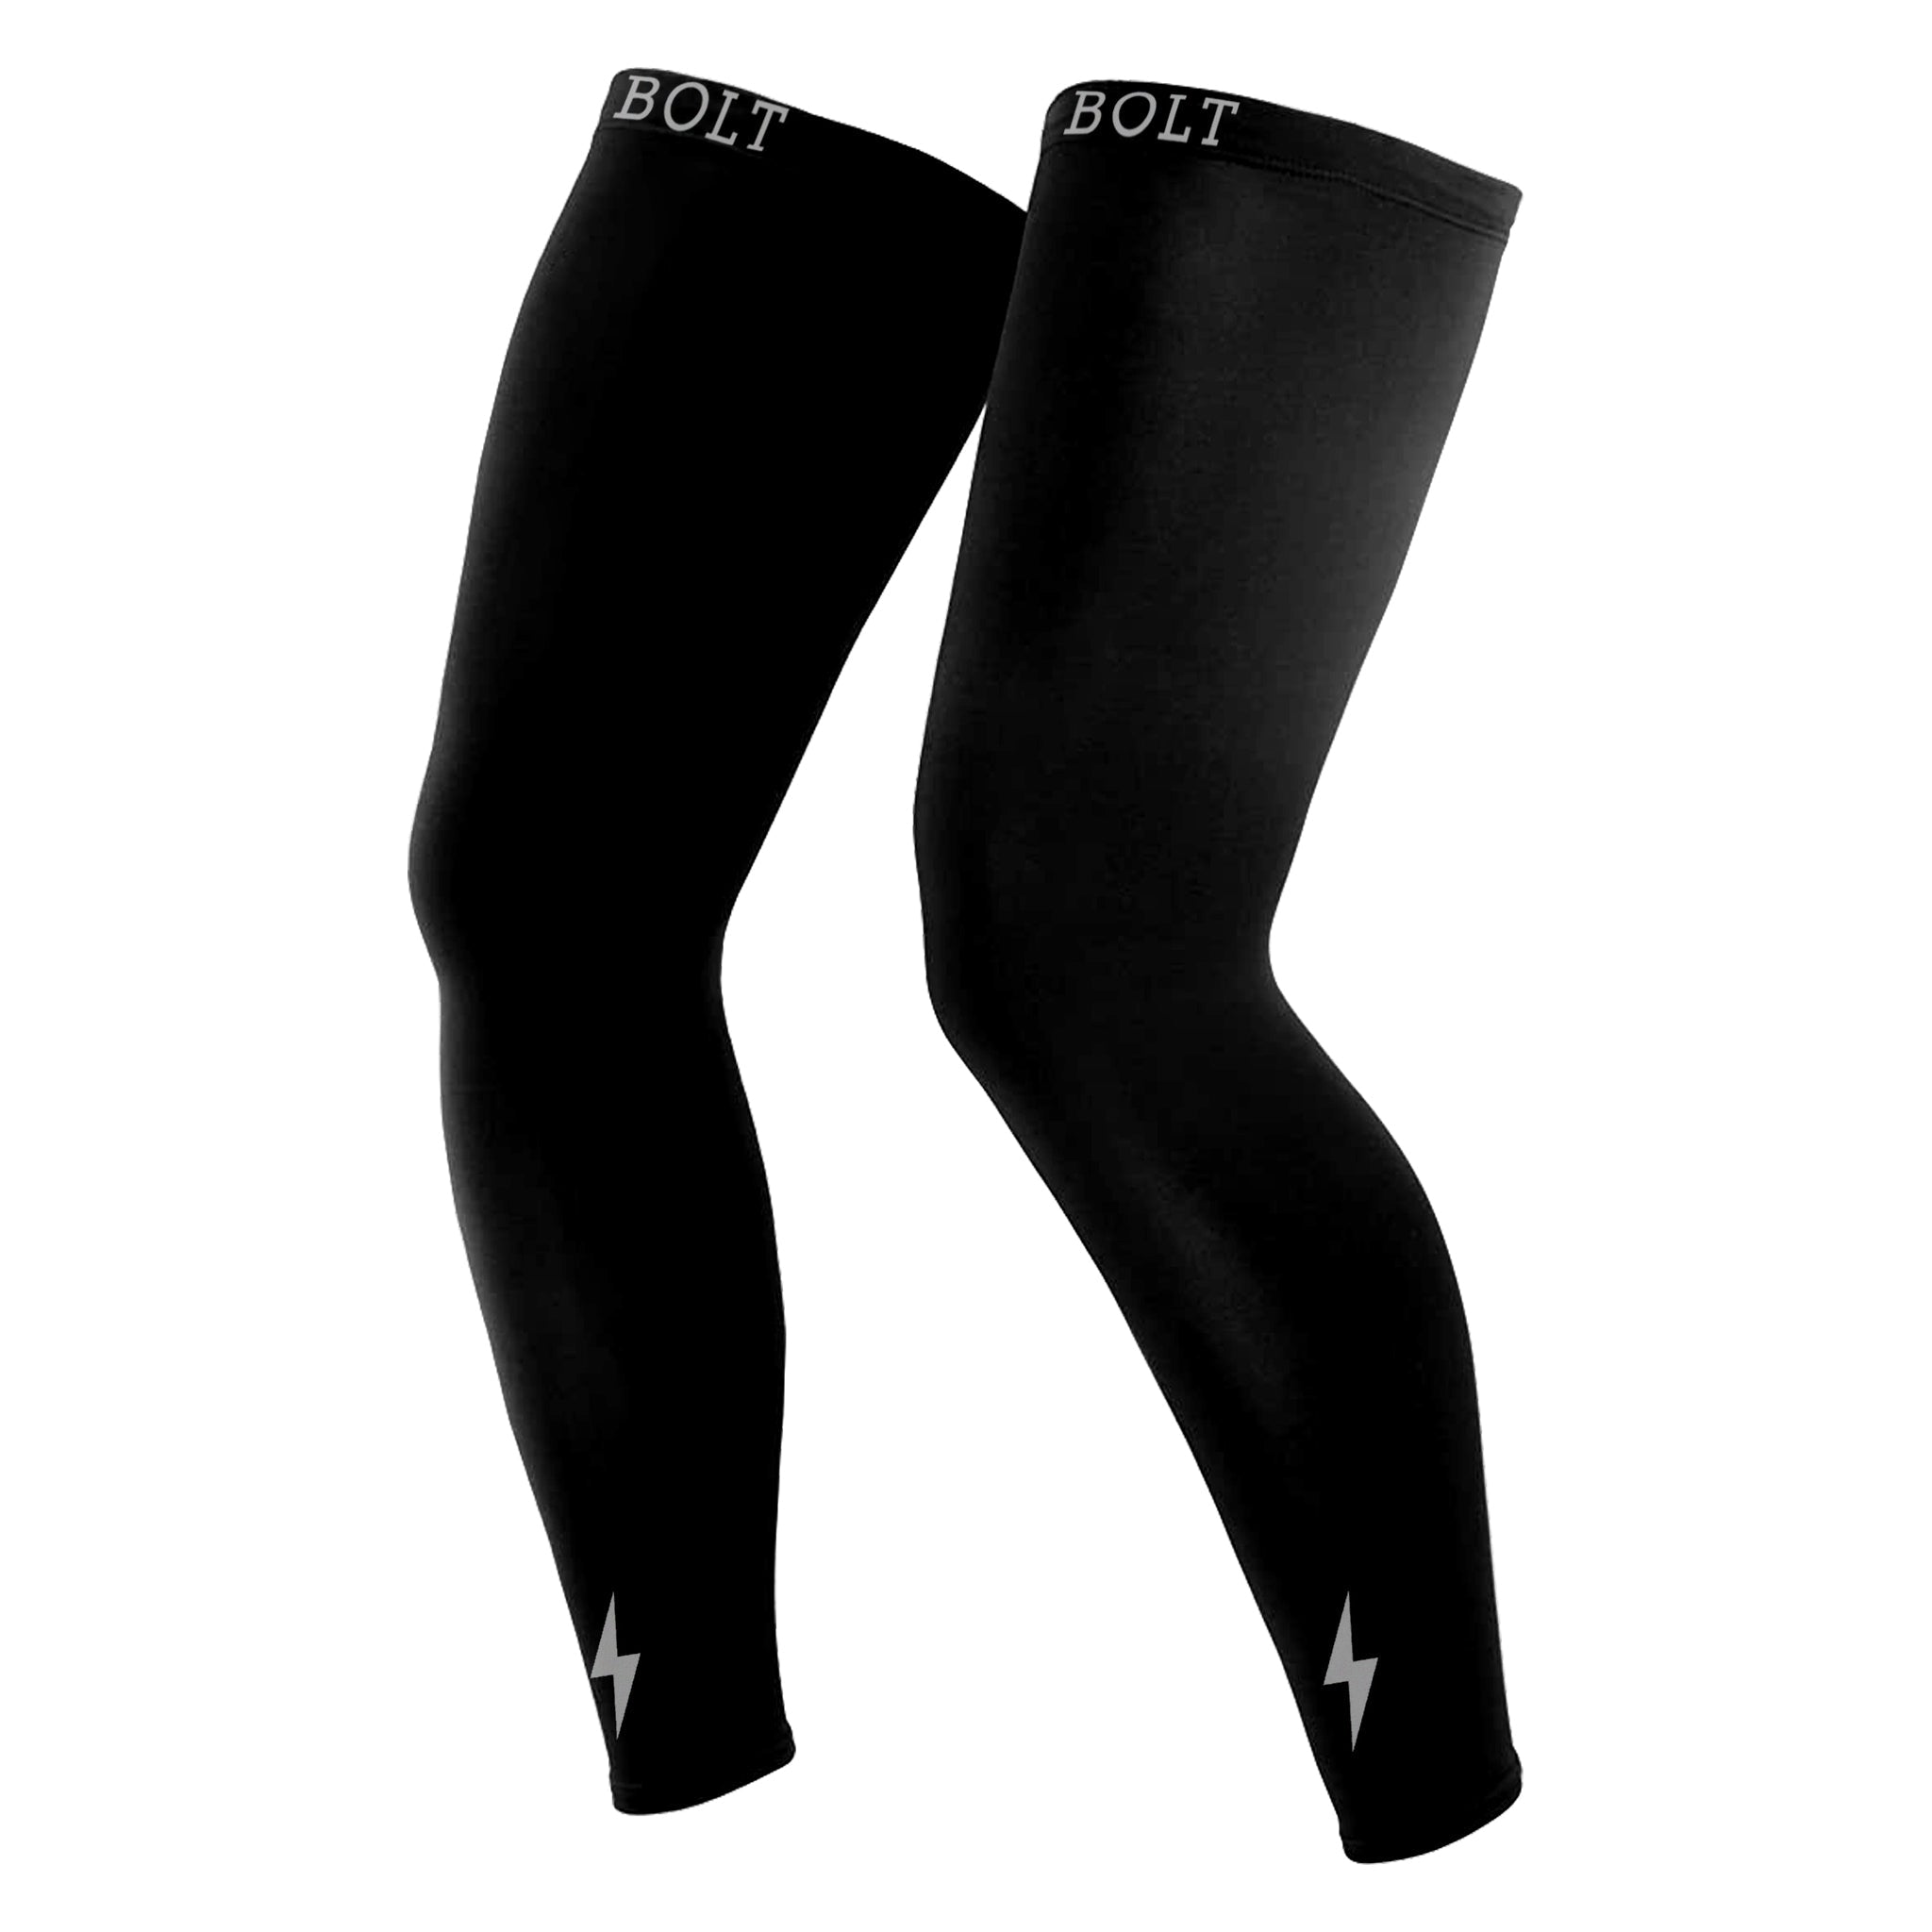 BRUCE BOLT Xtra Long Compression Leg Sleeves (pair) - BLACK